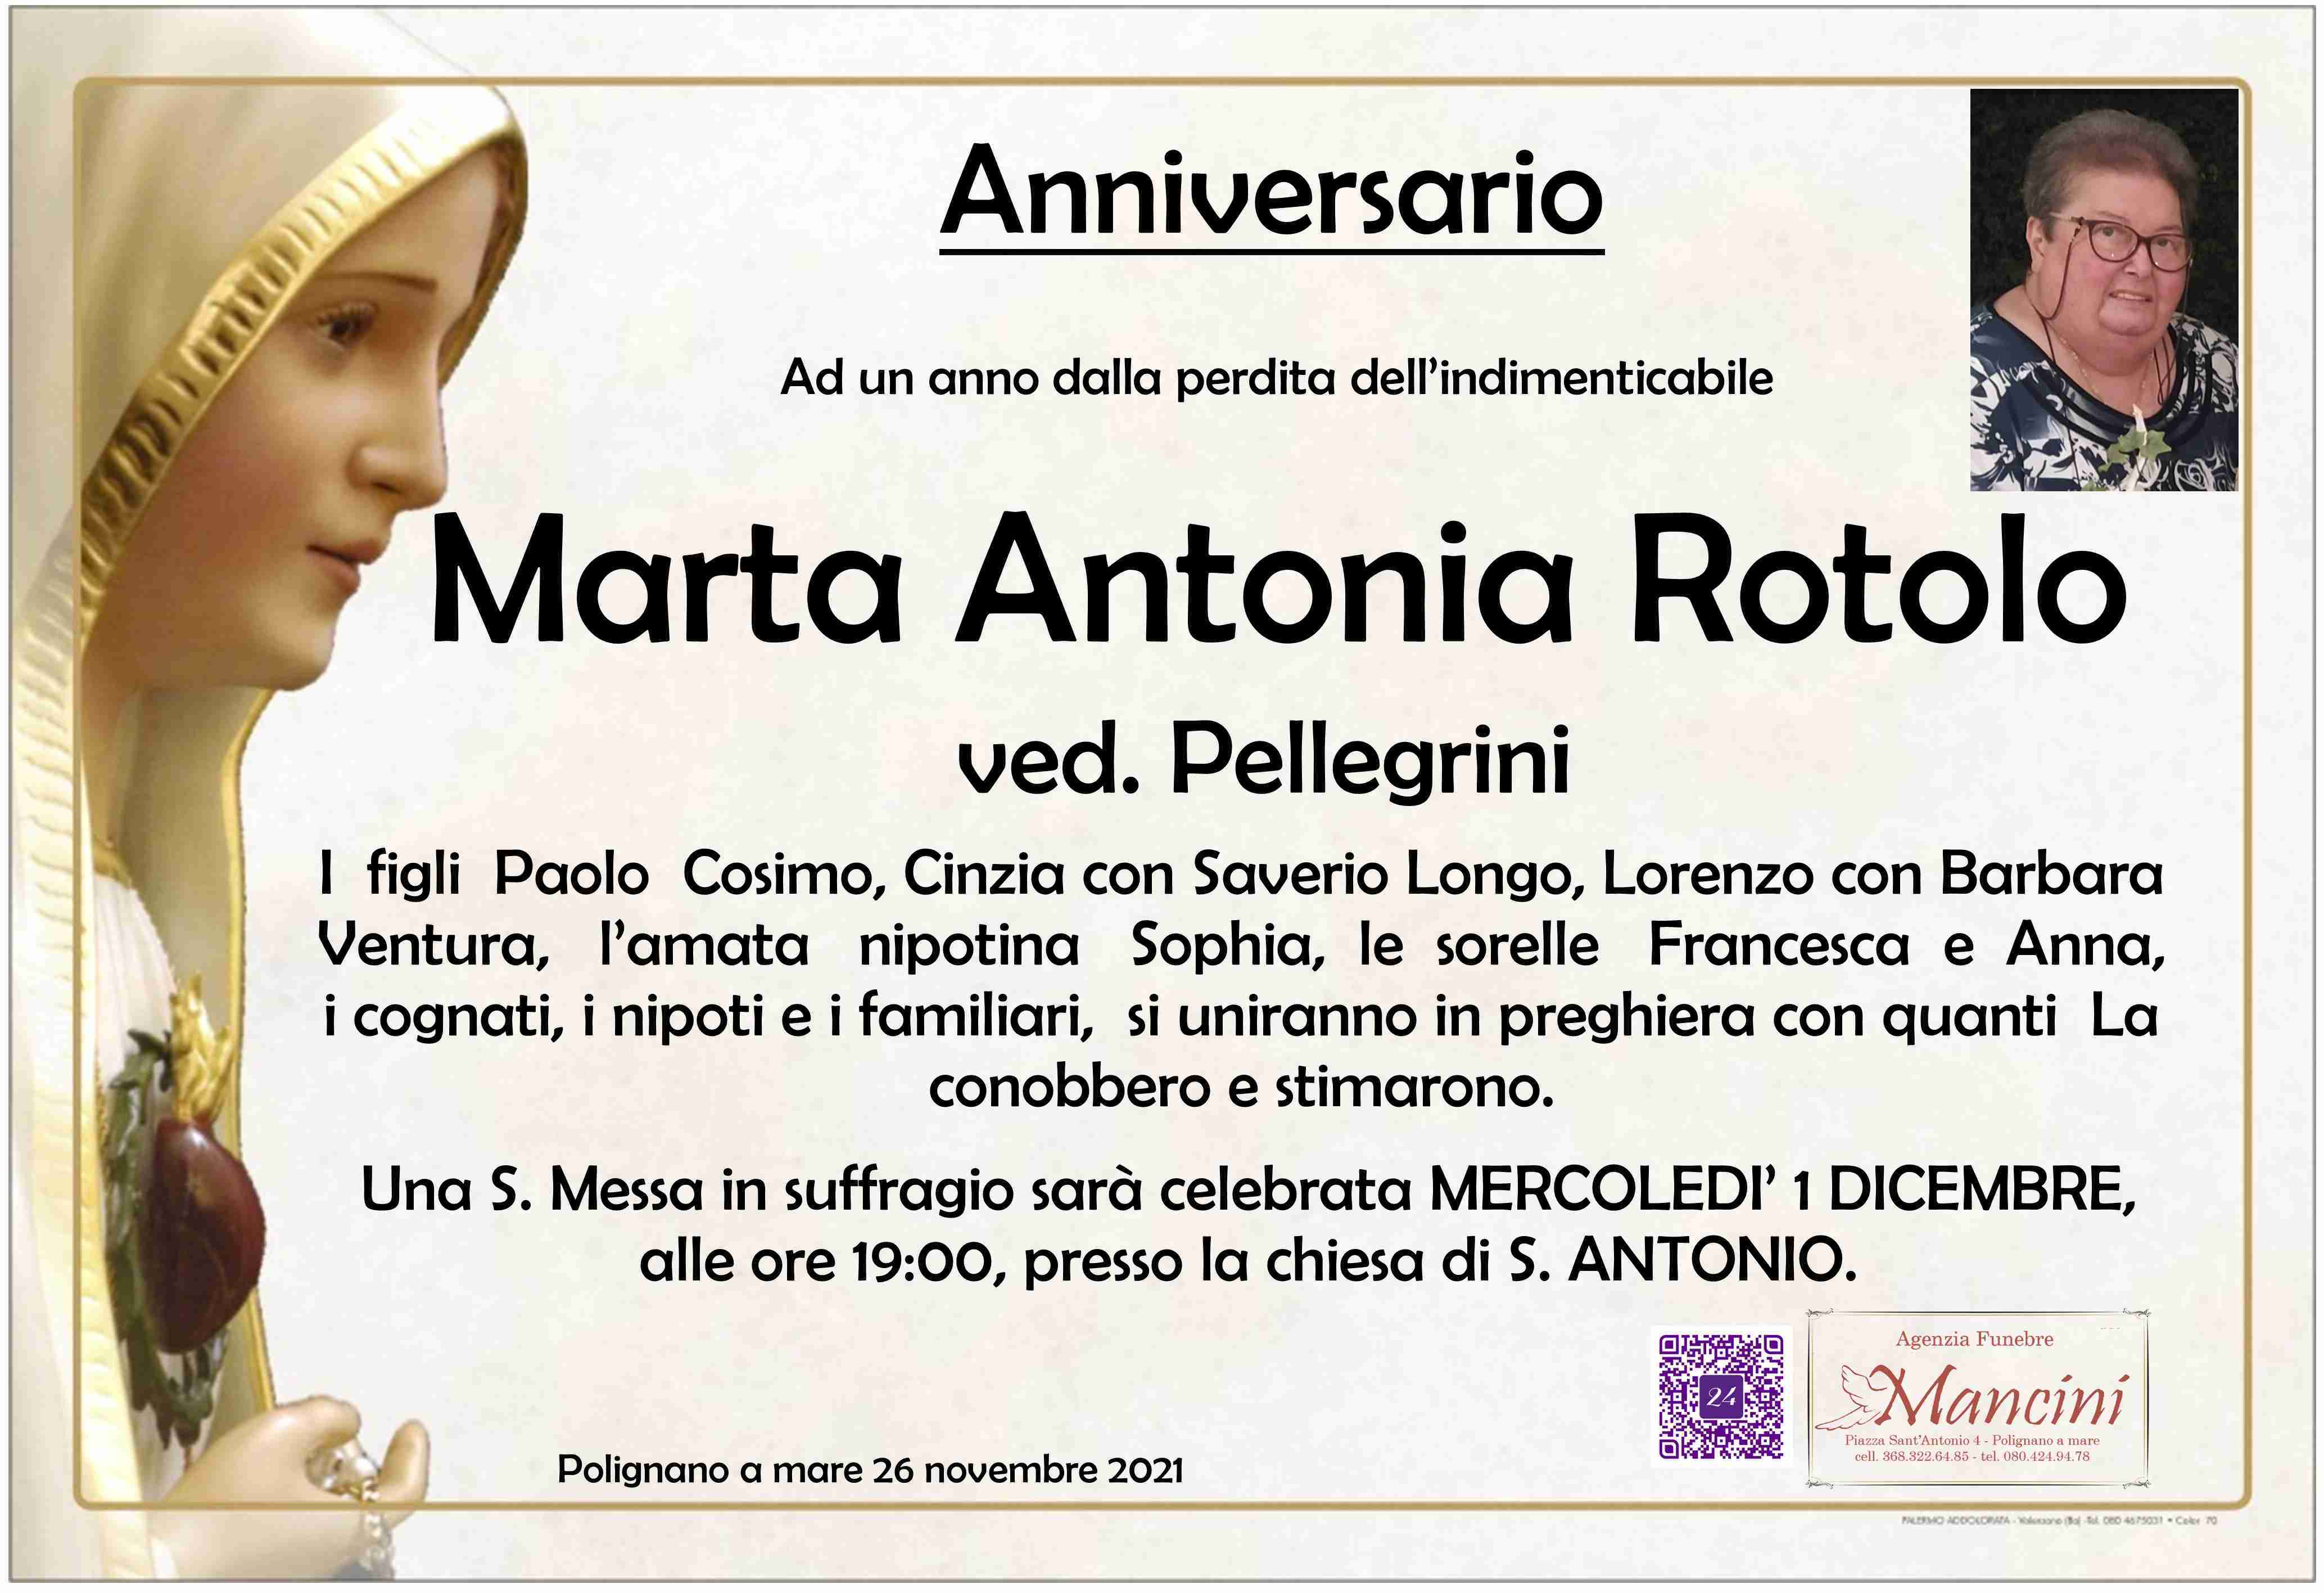 Marta Antonia Rotolo